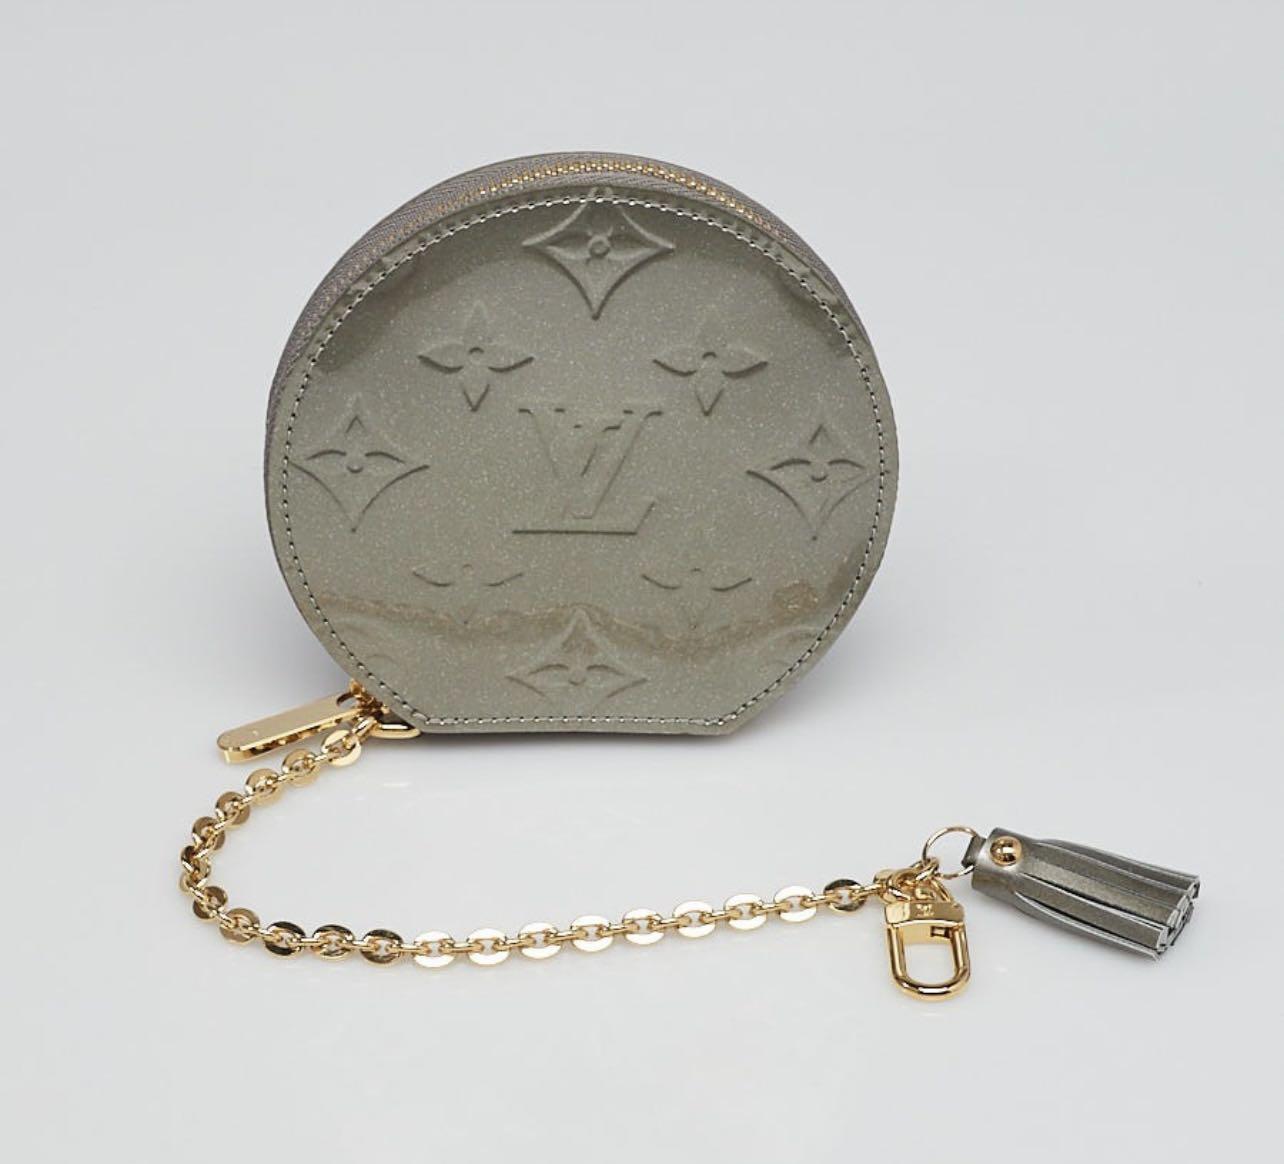 LV round coin pouch (Rare)